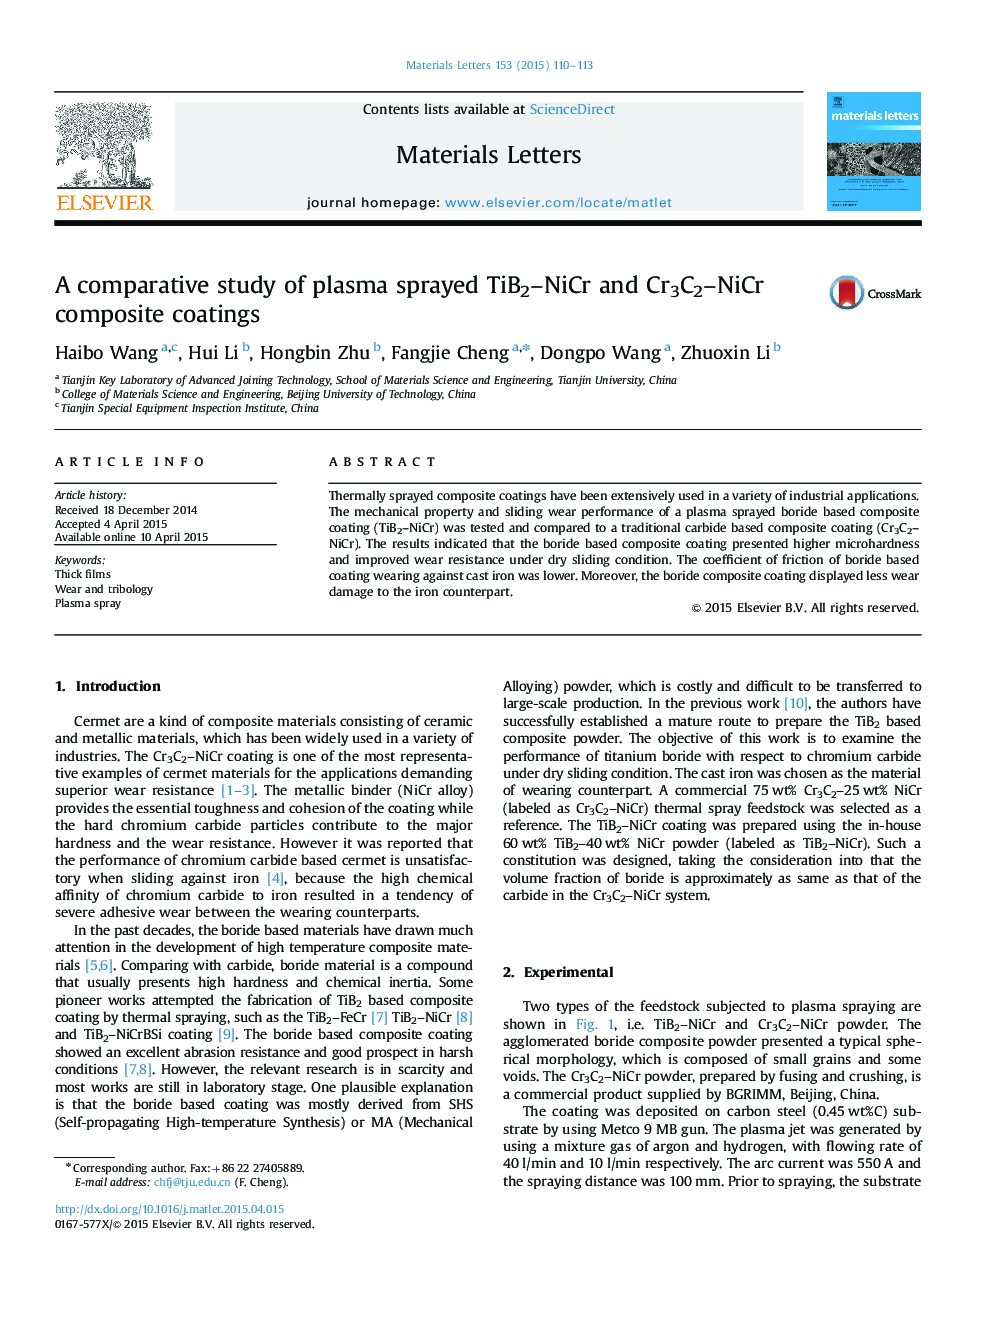 A comparative study of plasma sprayed TiB2–NiCr and Cr3C2–NiCr composite coatings